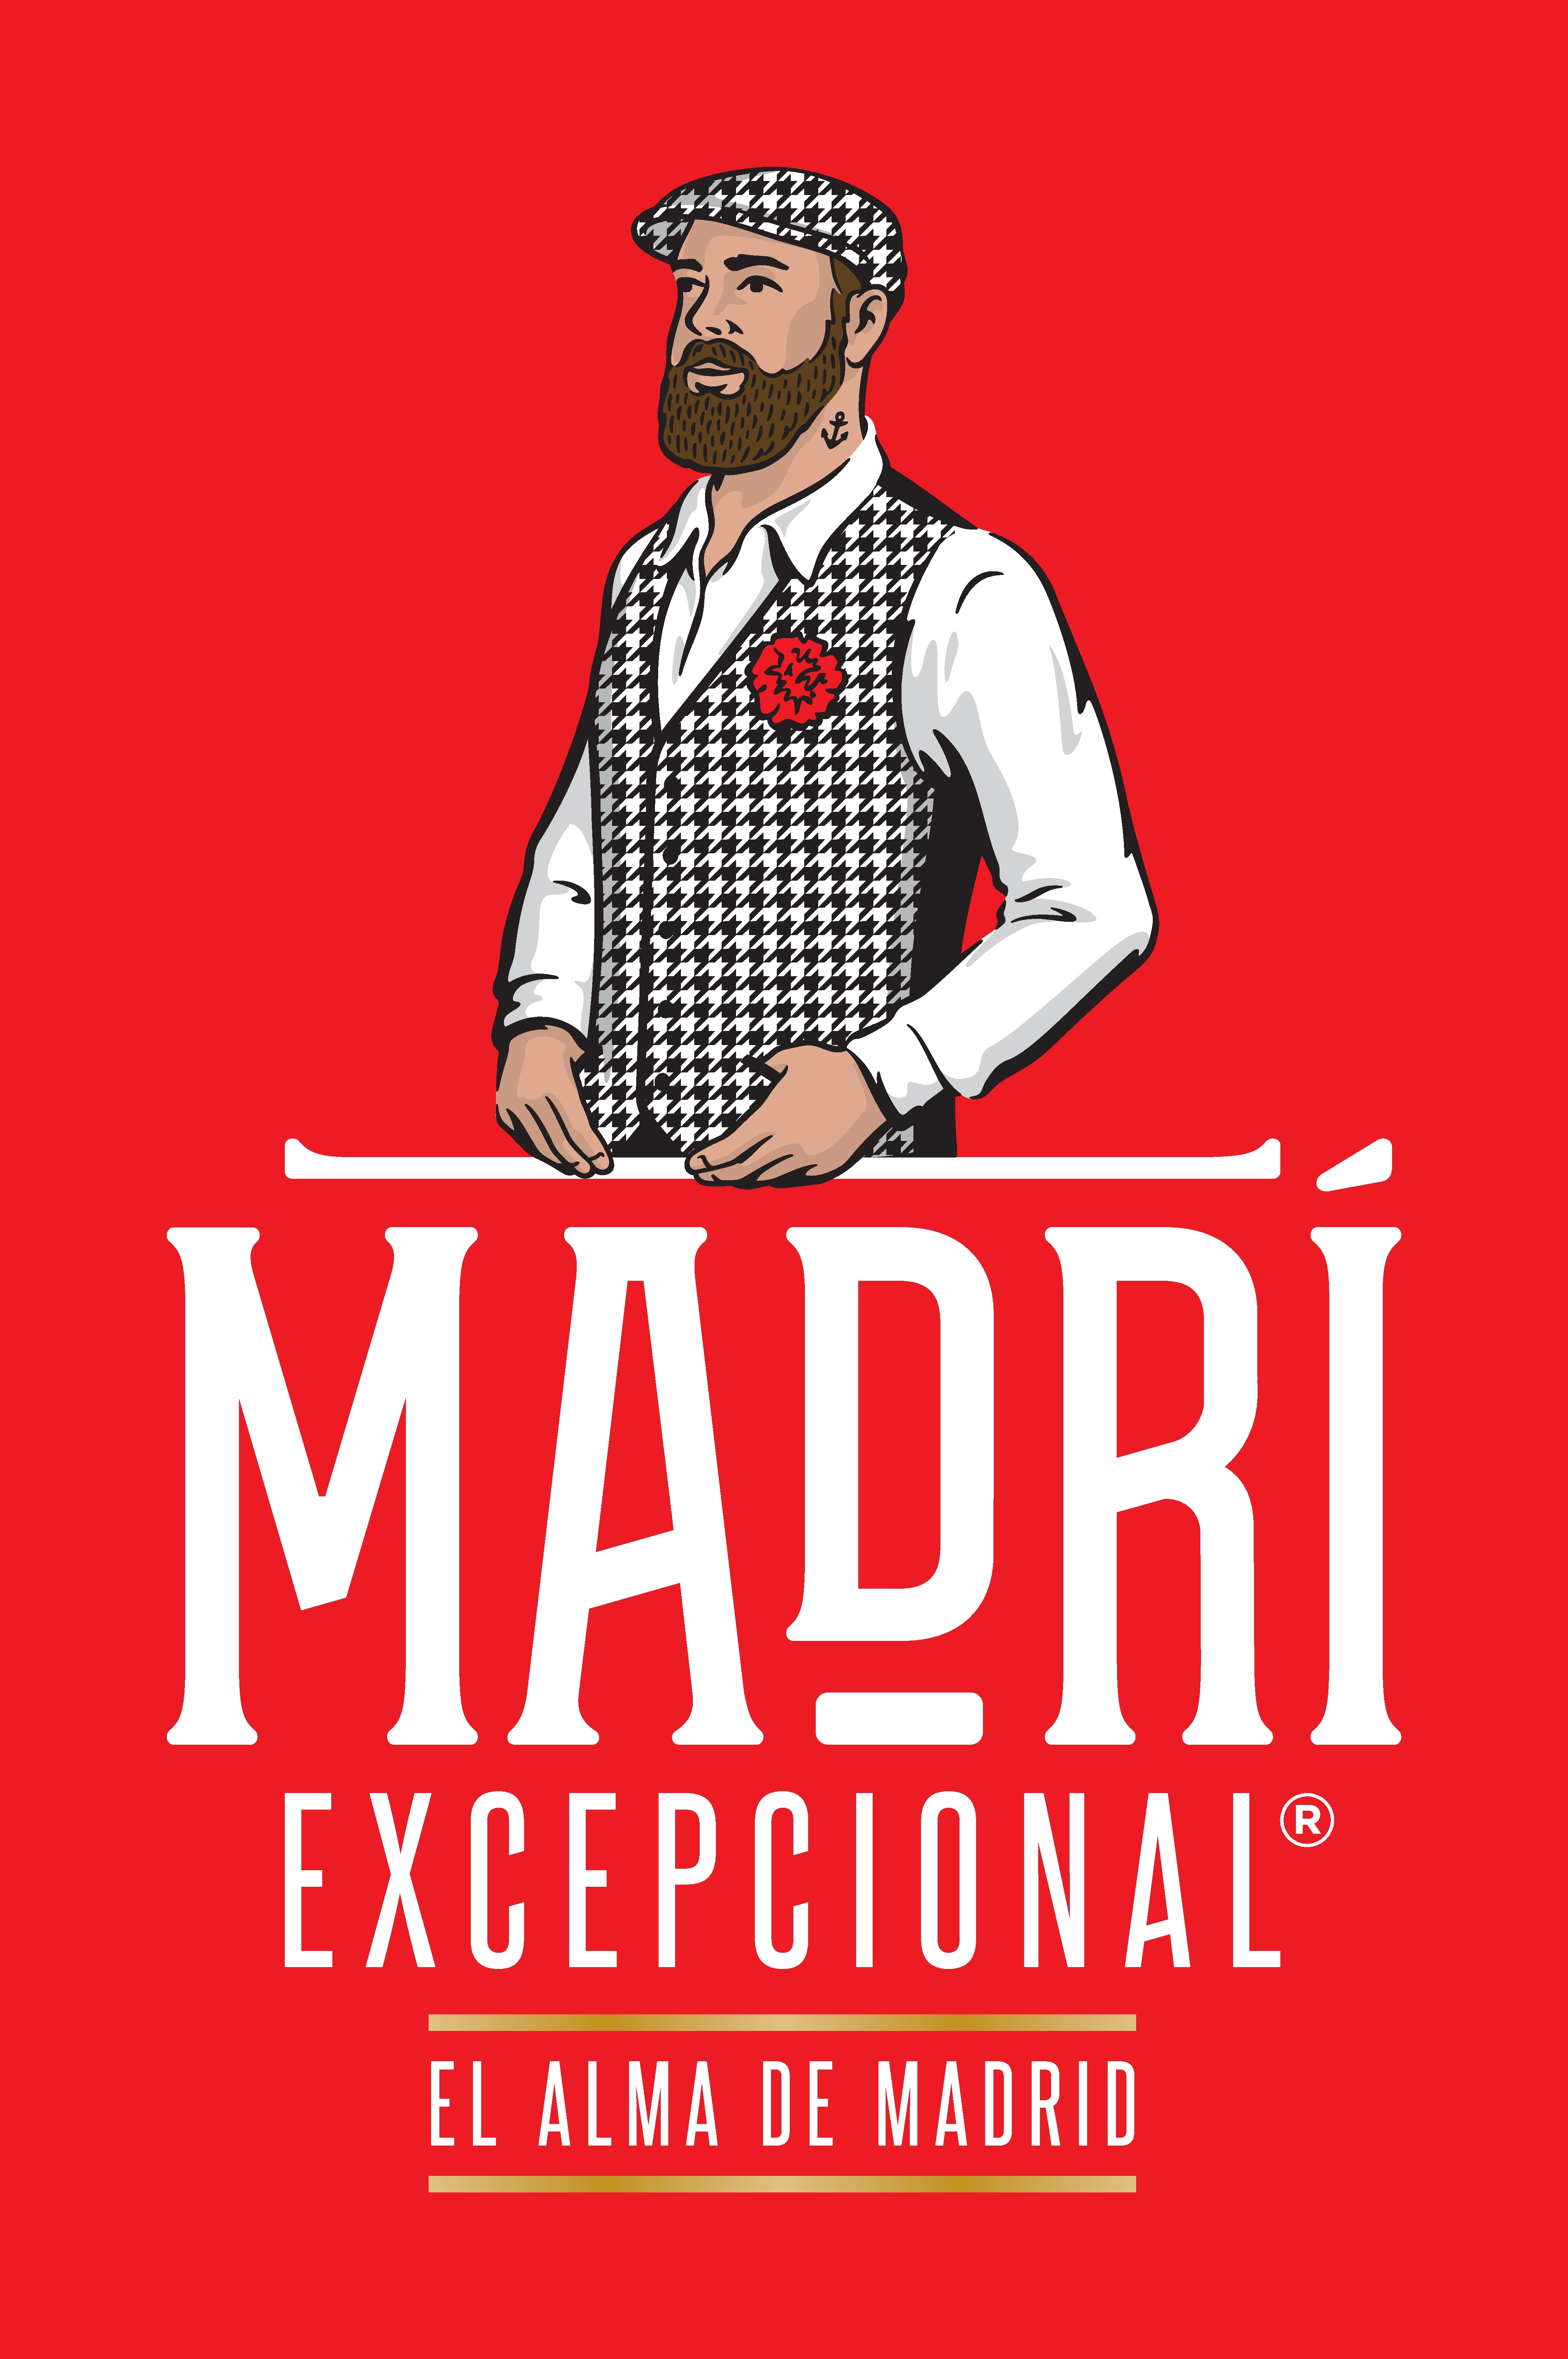 Madrí logo on a red background